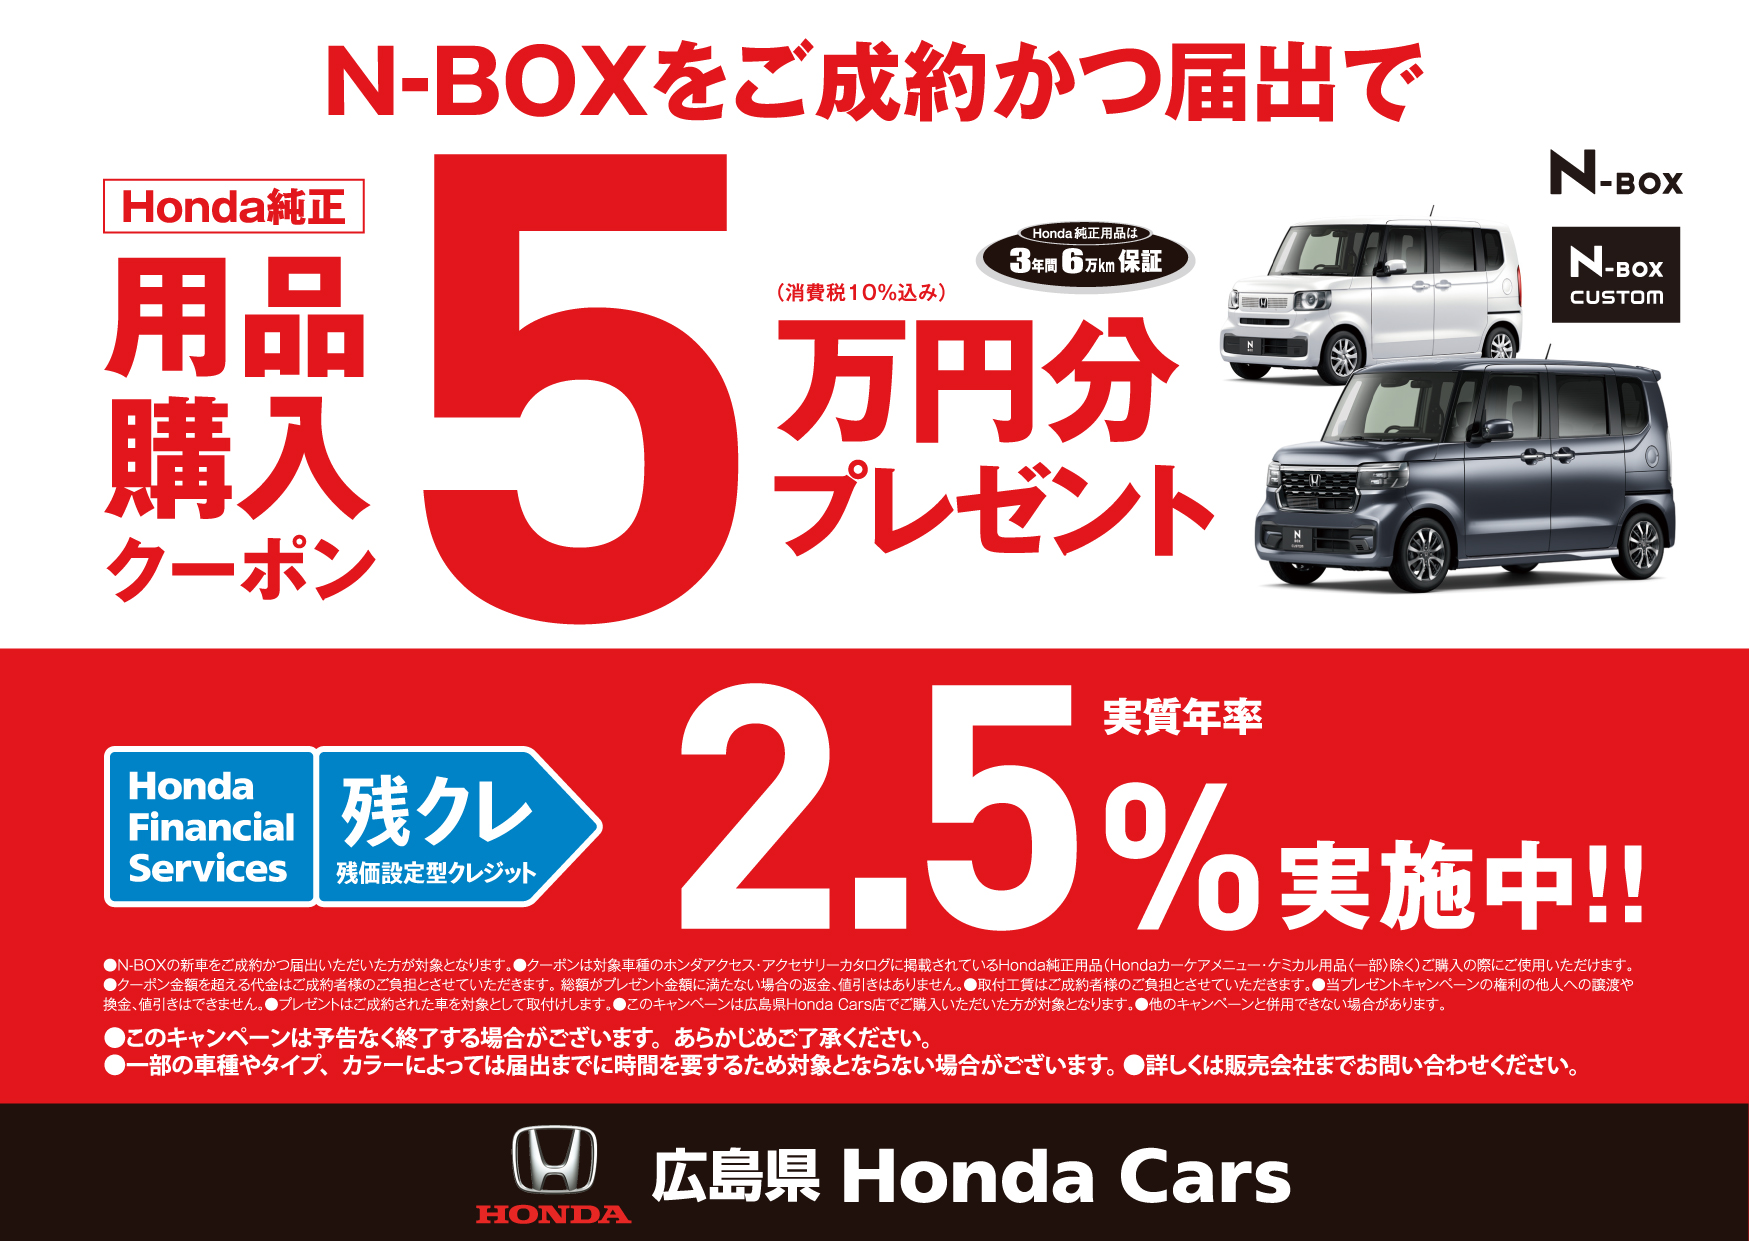 N-BOXをご成約かつ届出でHonda純正用品購入クーポン5万円分(消費税10％込み)プレゼント！